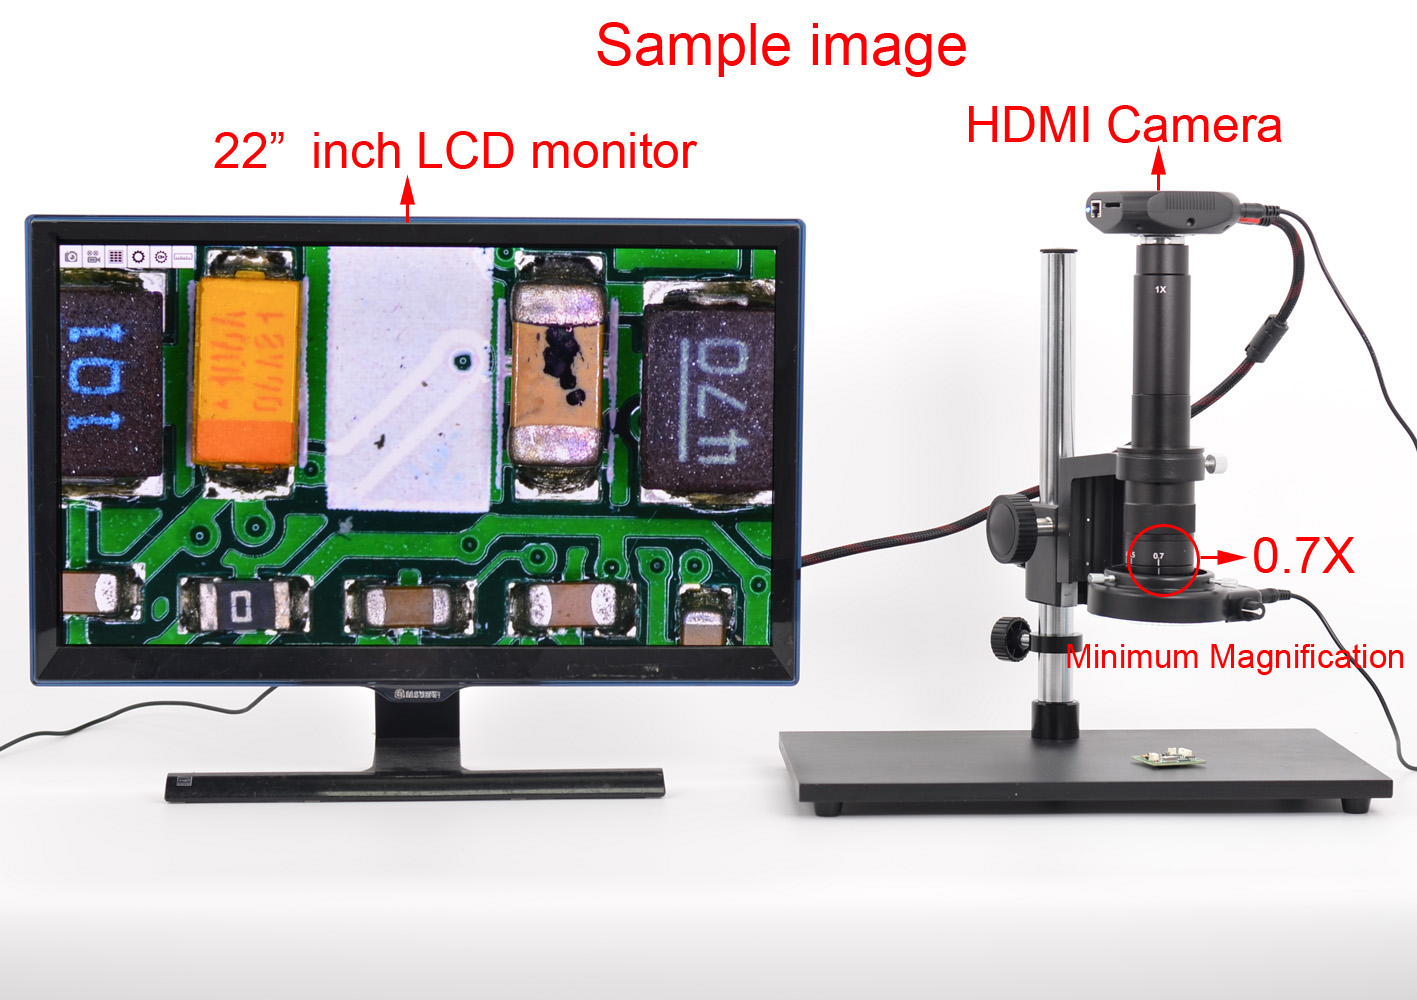 300x Zoom C-mount Glass Lens Adapter